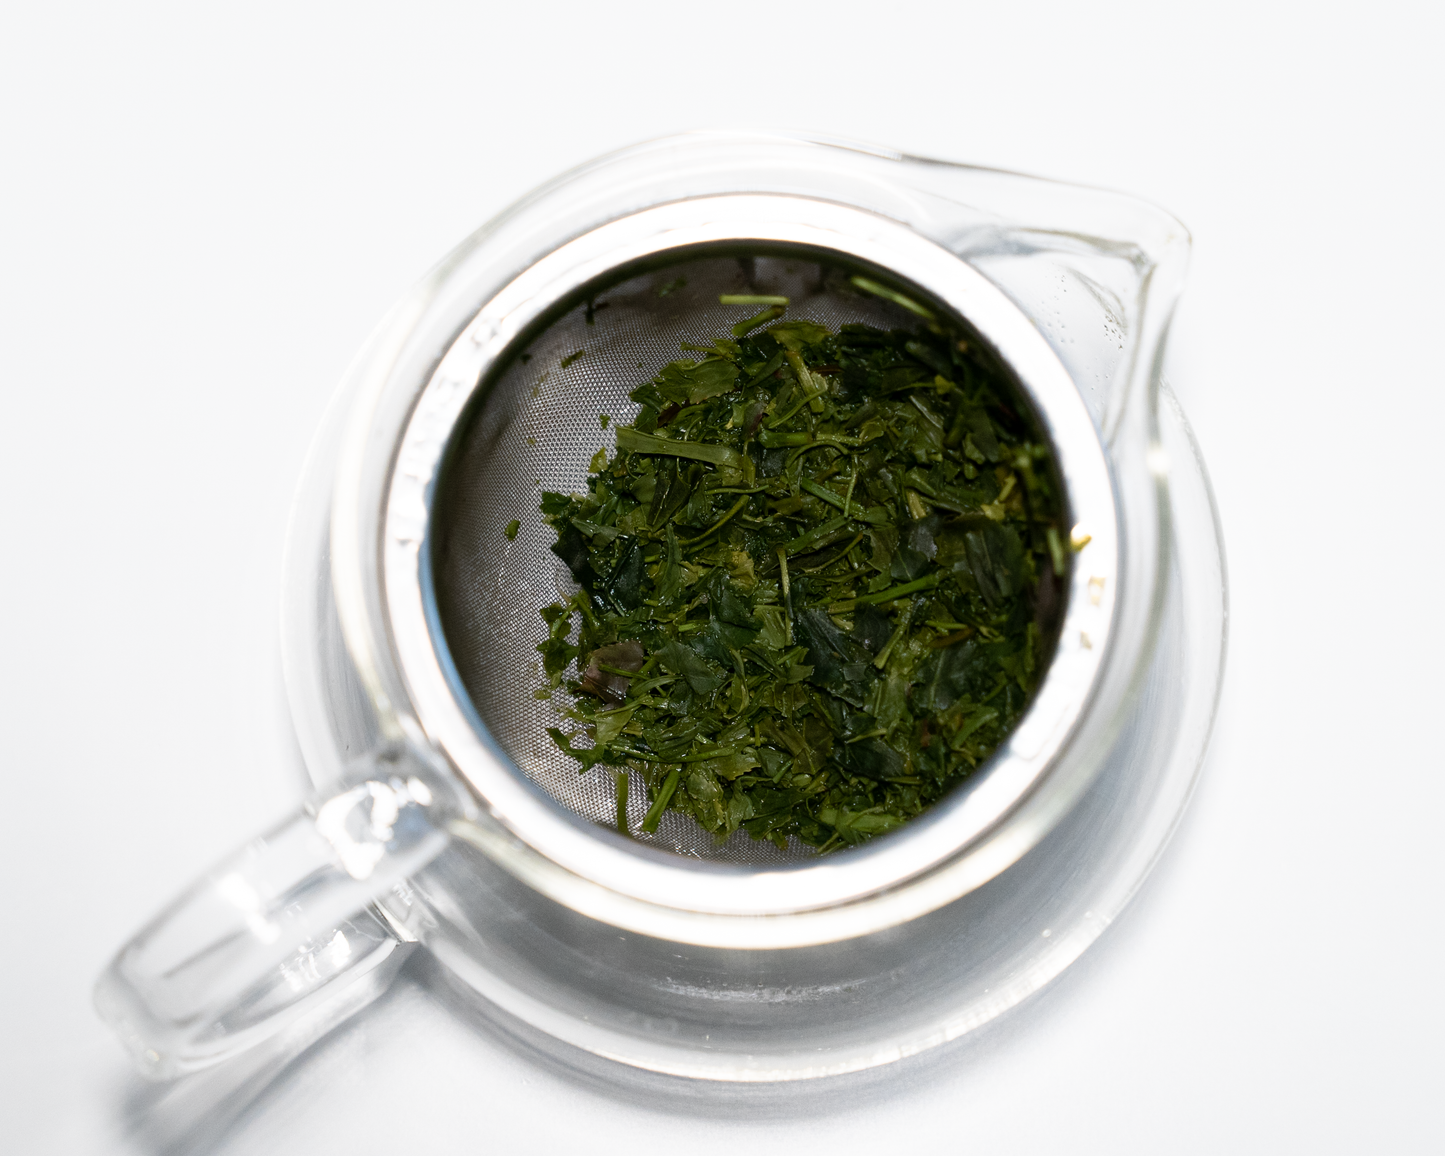 Rich Blend - Kabusecha Organic Premium Loose-Leaf Tea